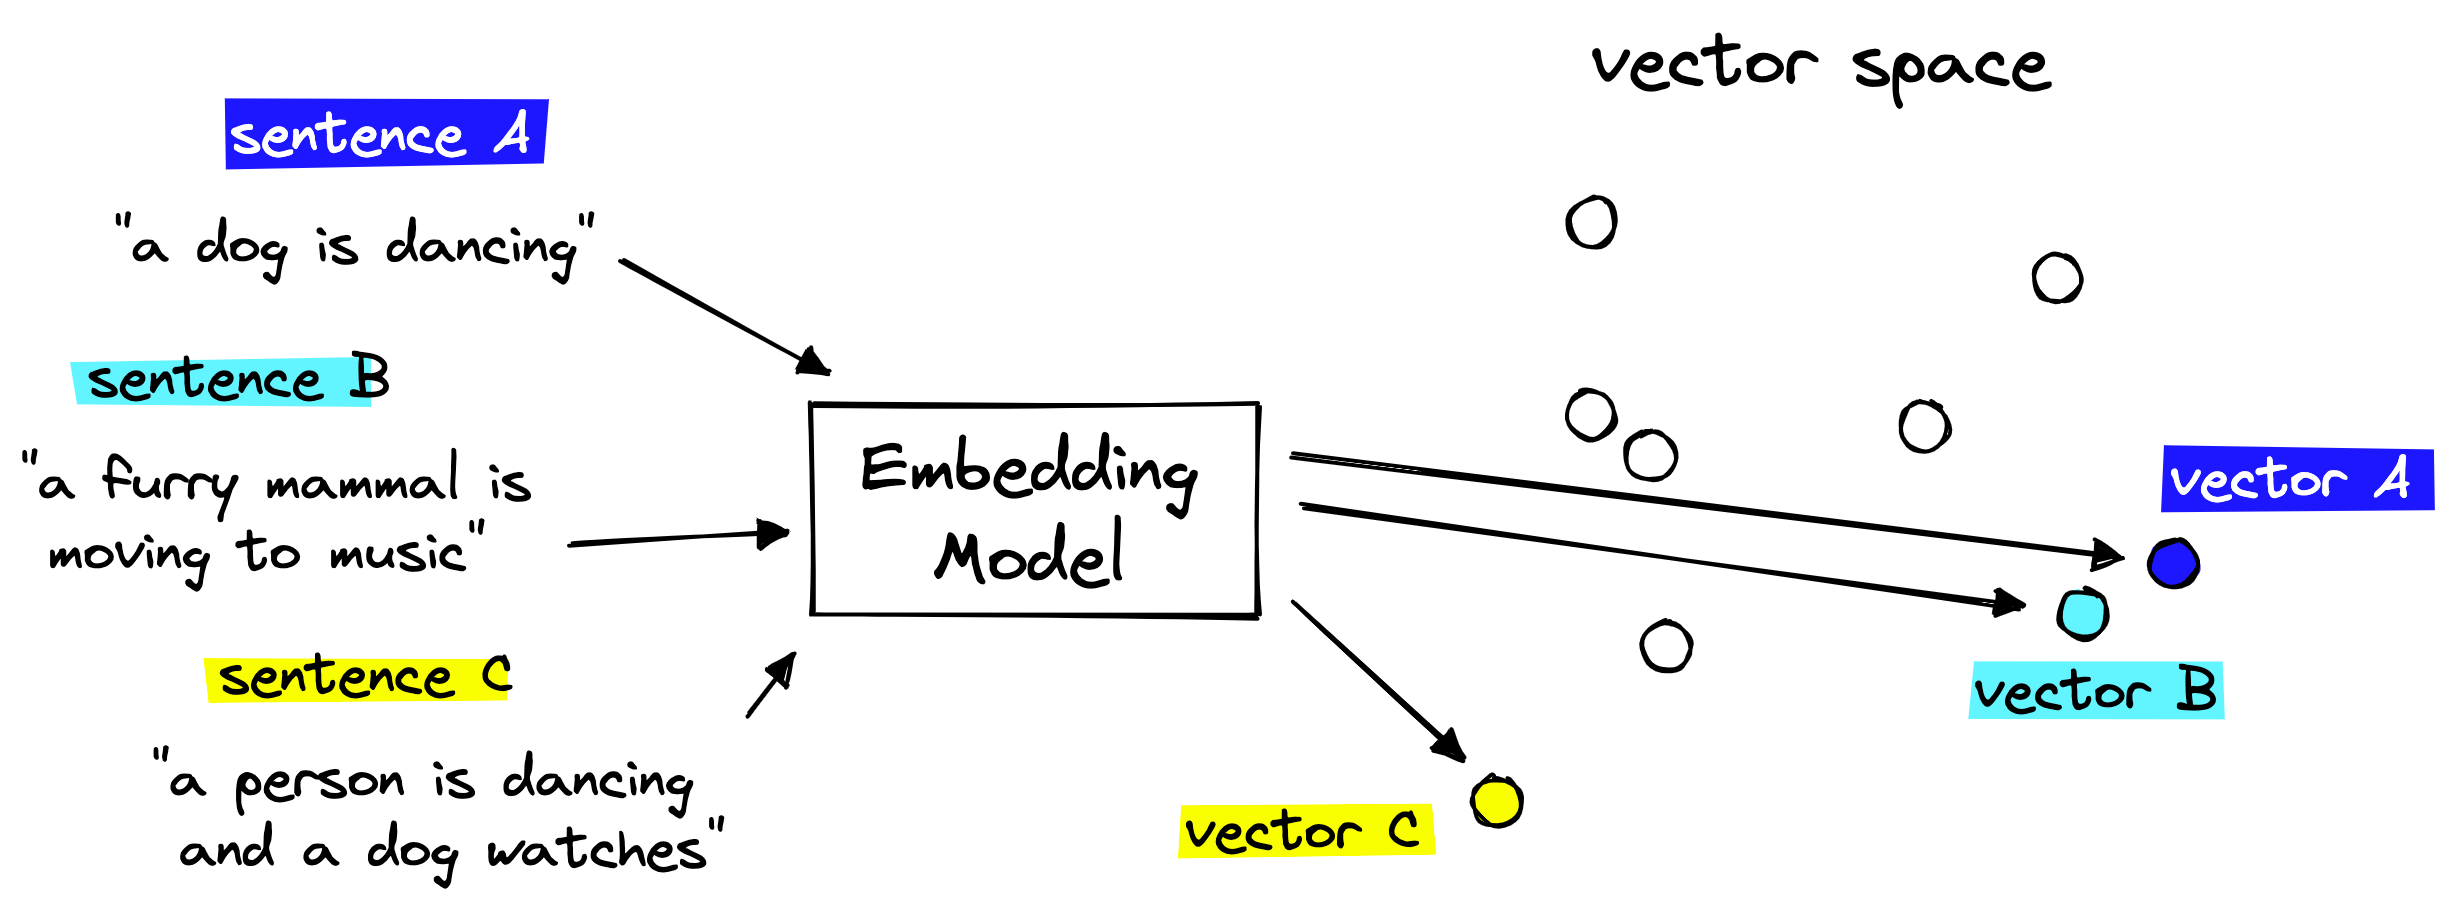 Creating embeddings